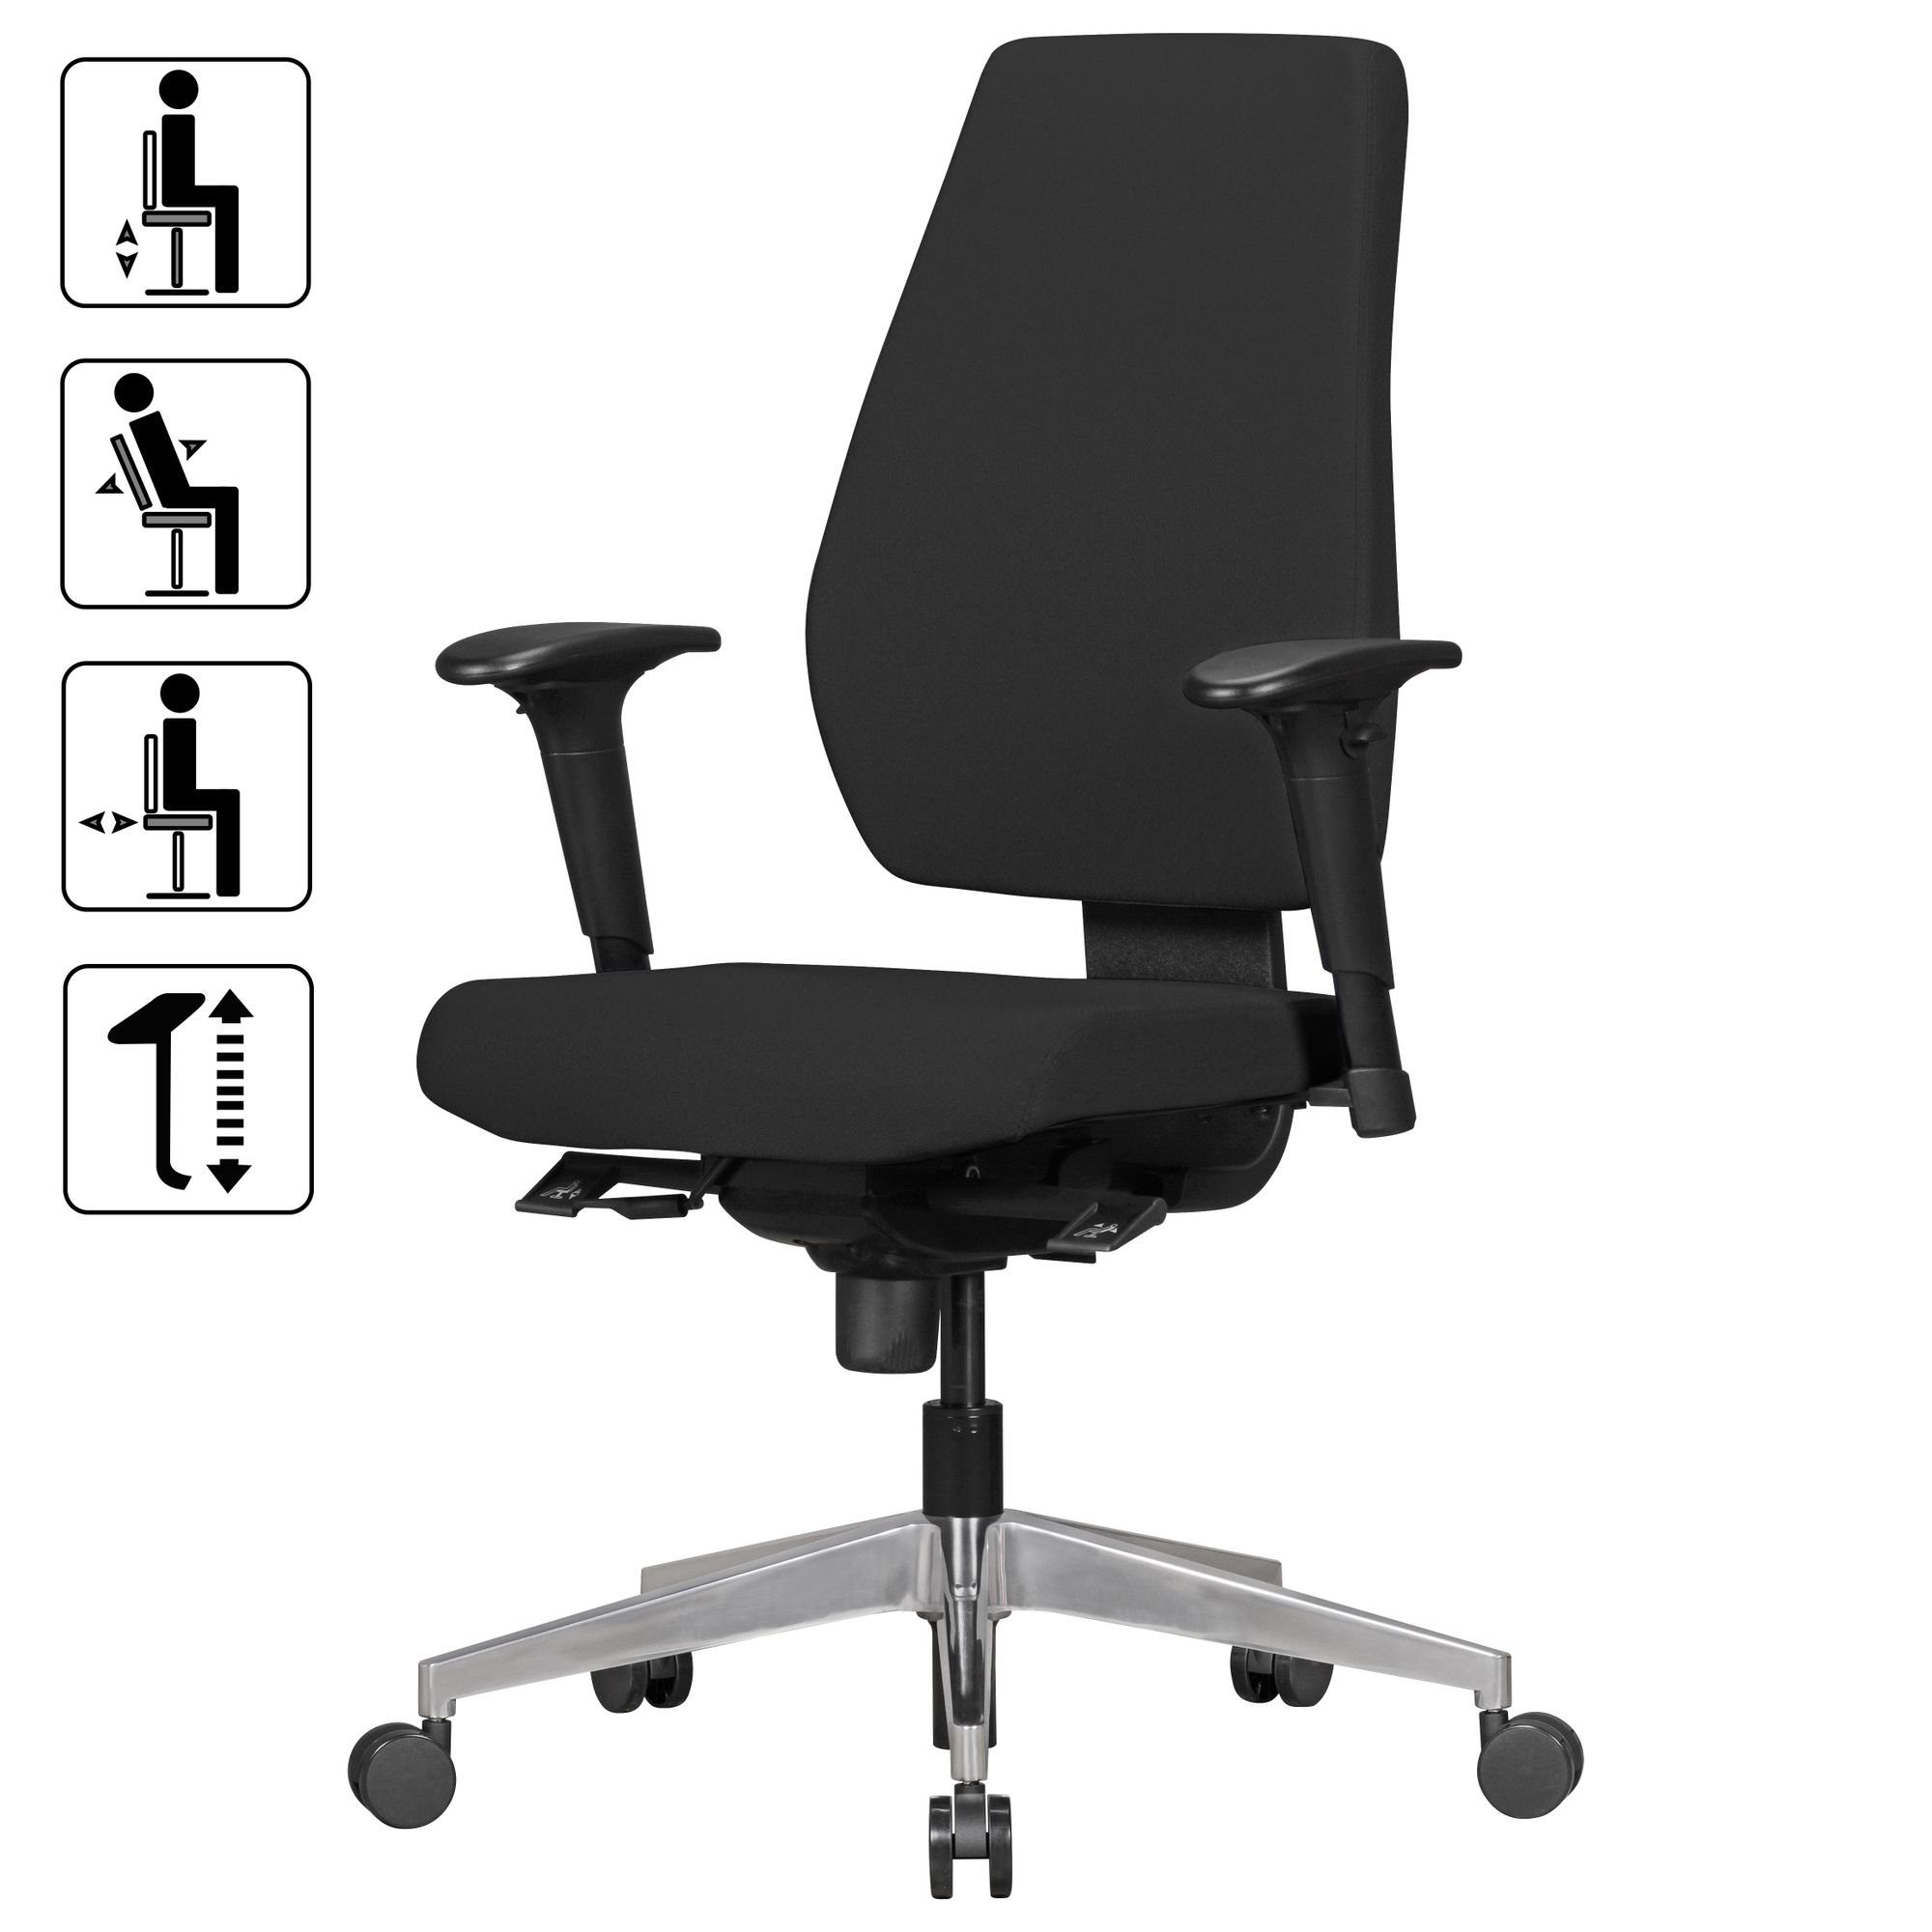 KADIMA DESIGN Komfortsitz mit Lendenwirbelstütze Bürostuhl ergonomischer Arbeitssessel,